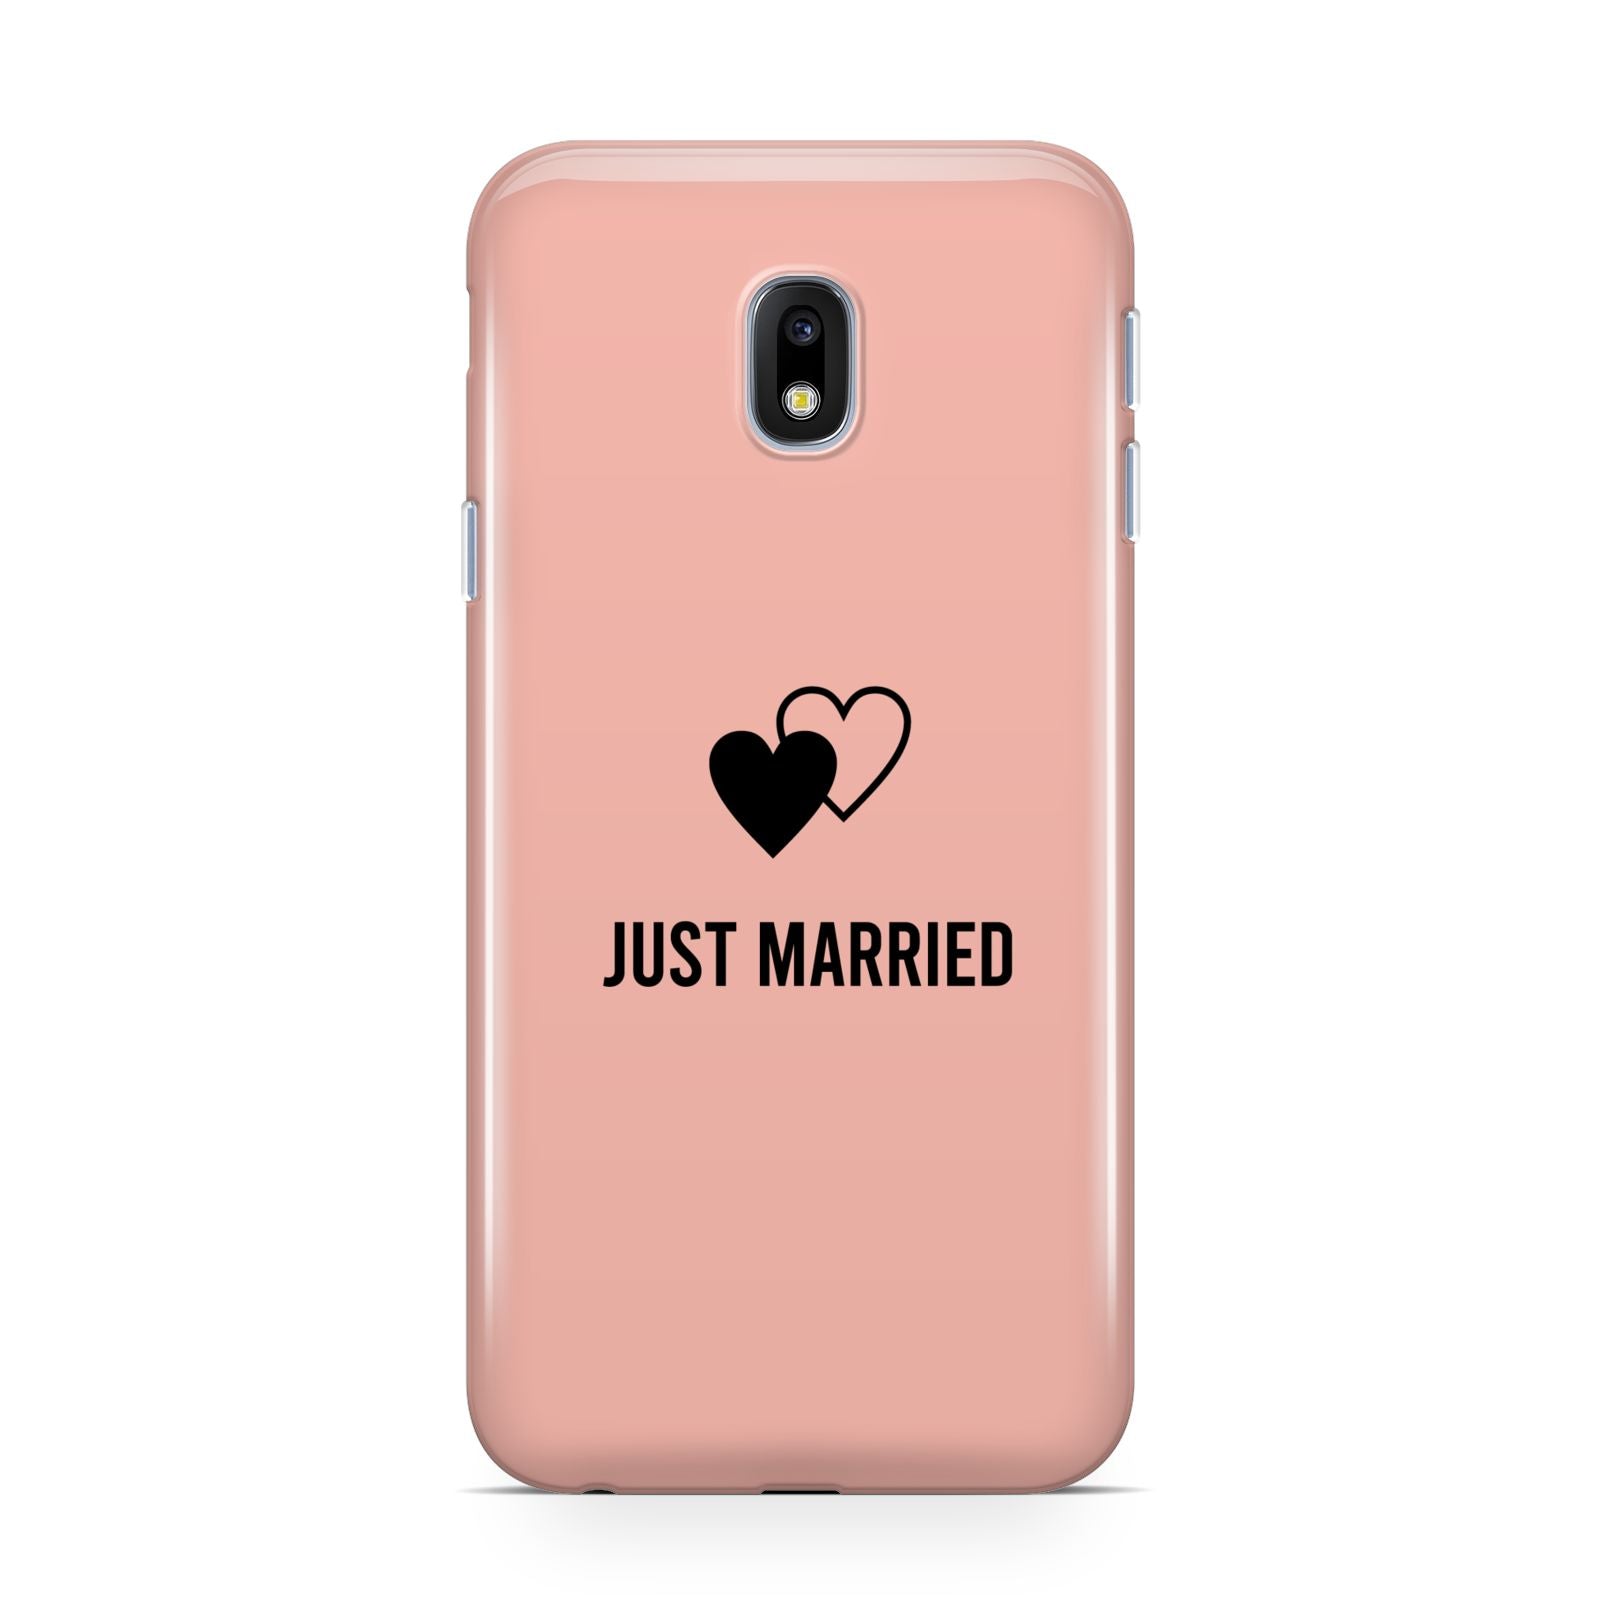 Just Married Samsung Galaxy J3 2017 Case